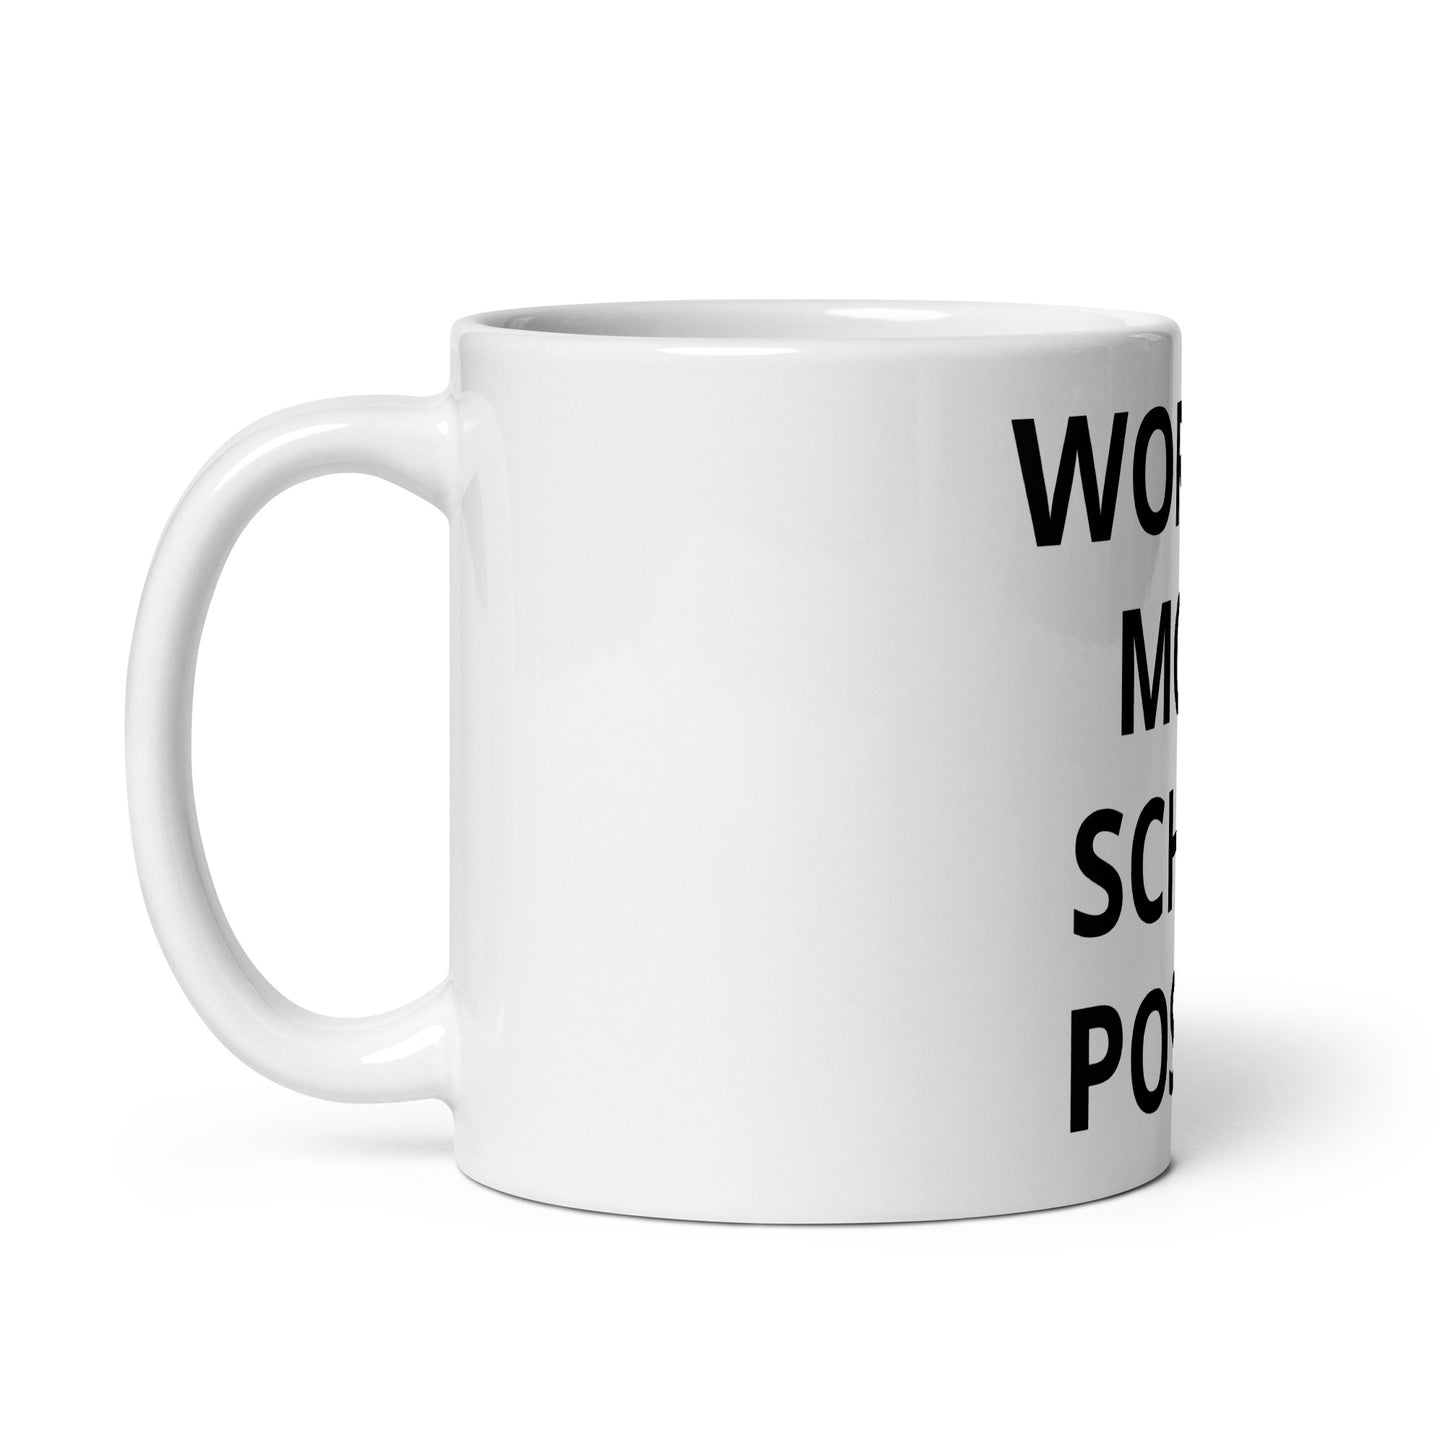 (06) WORLD'S MOST SCHIZO POSTER mug for drinks